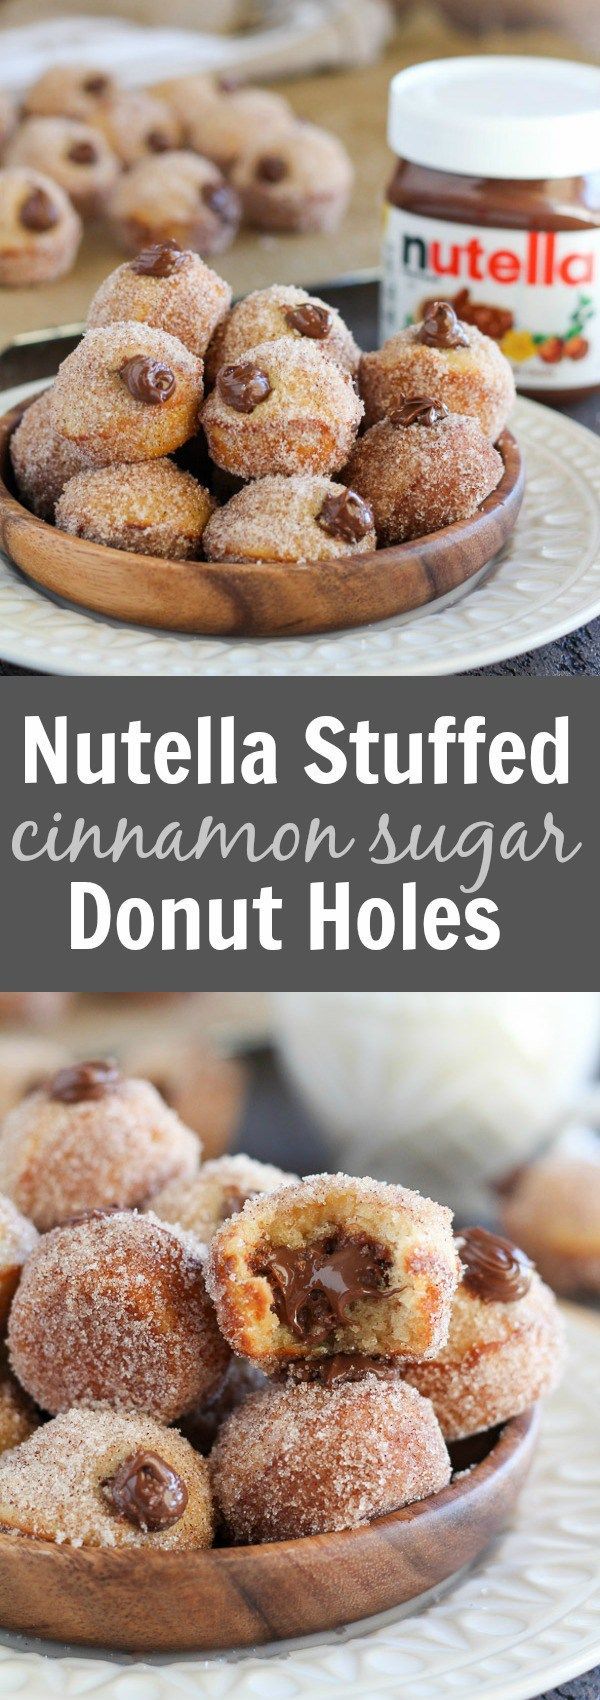 Nutella Stuffed Cinnamon Sugar Donut Holes – Baked vanilla donut holes coated in cinnamon sugar and filled with creamy Nutella. No